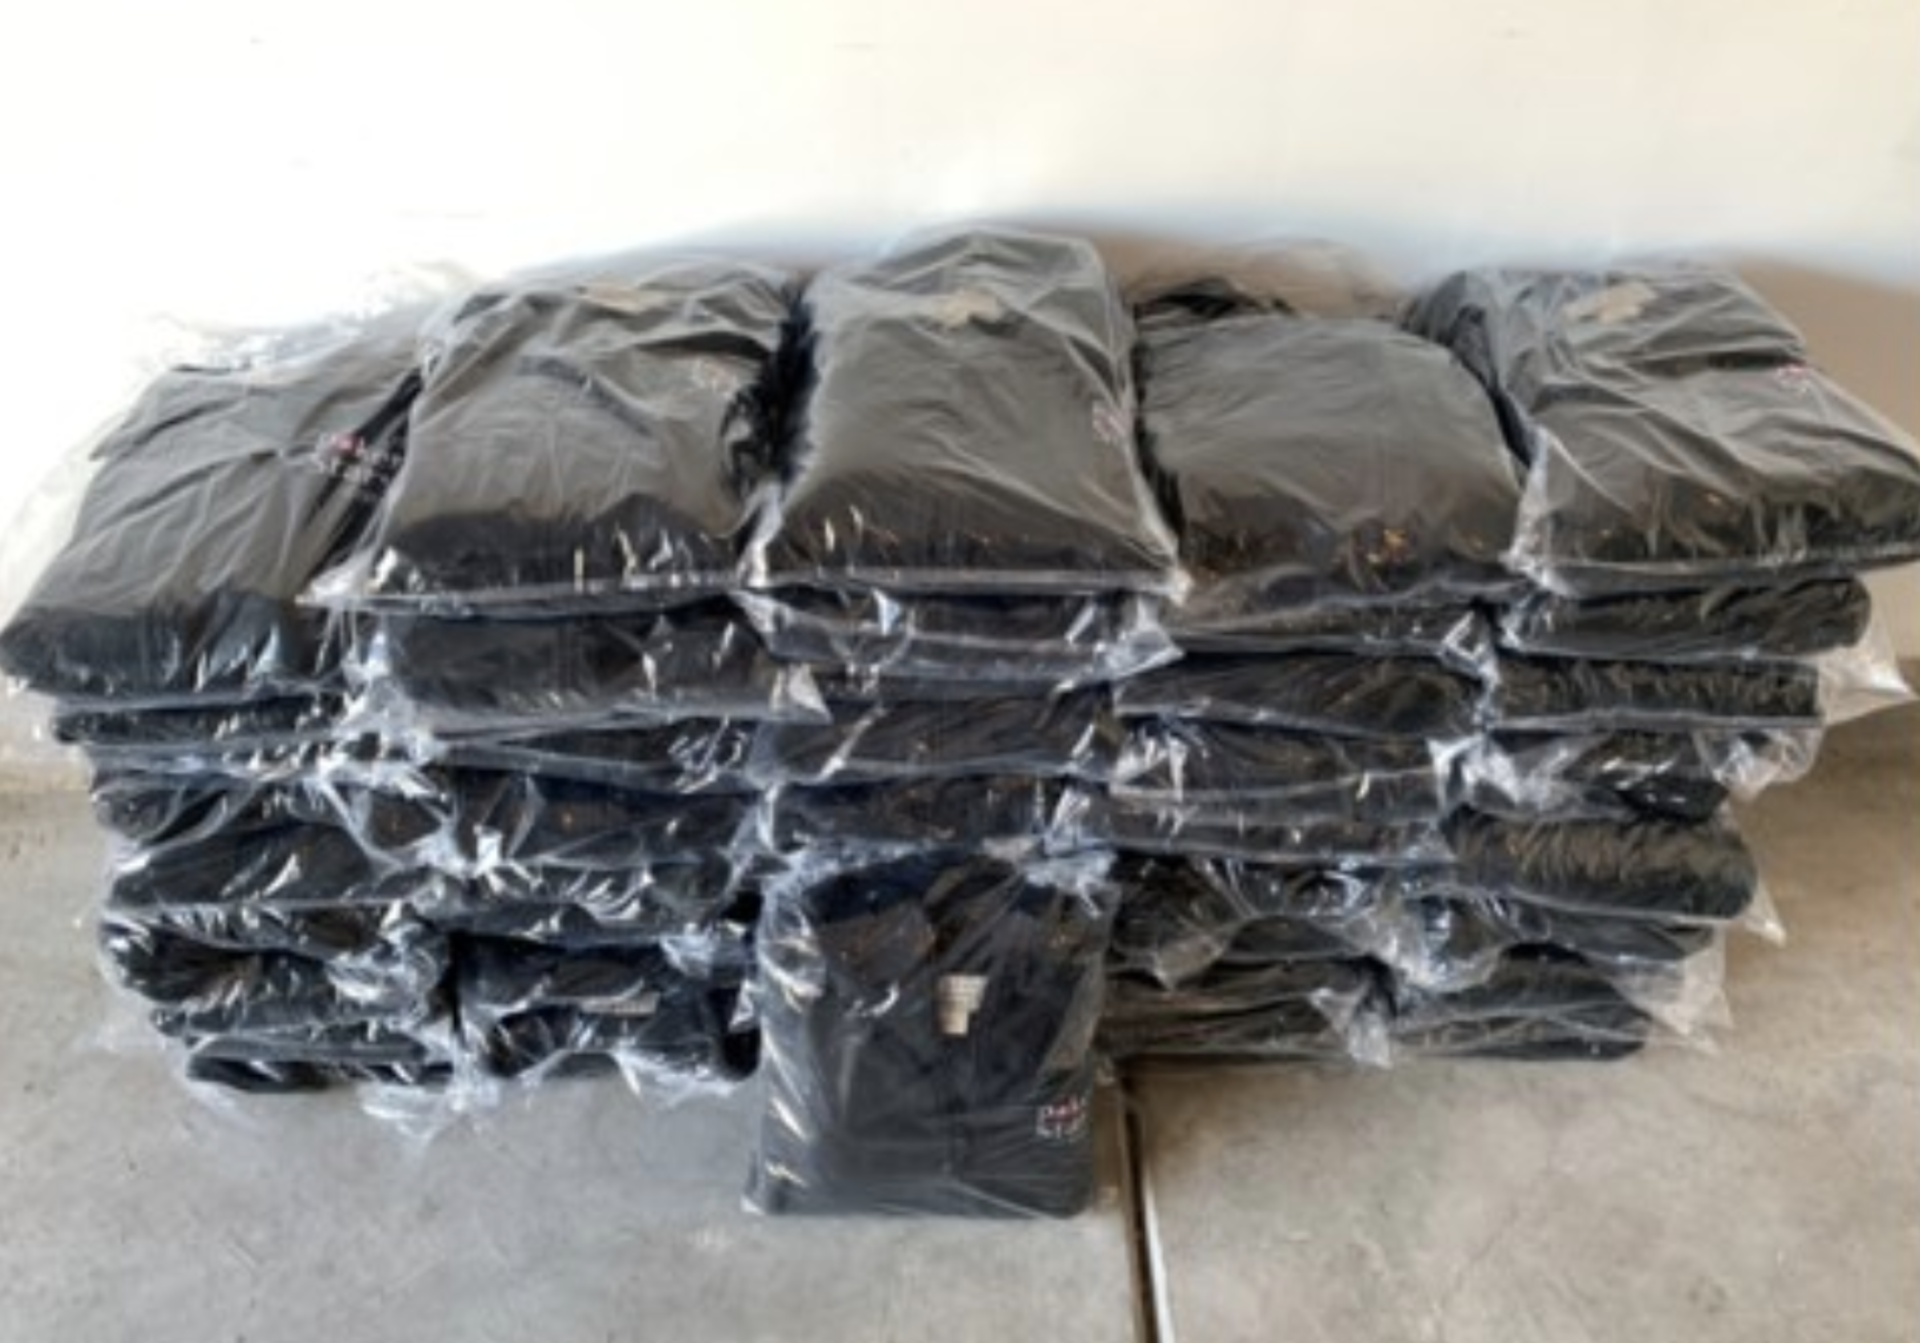 69 Fleece Men's Zip-Up Jackets, Colorado Timberline Brand Authentic Outerwear, Large